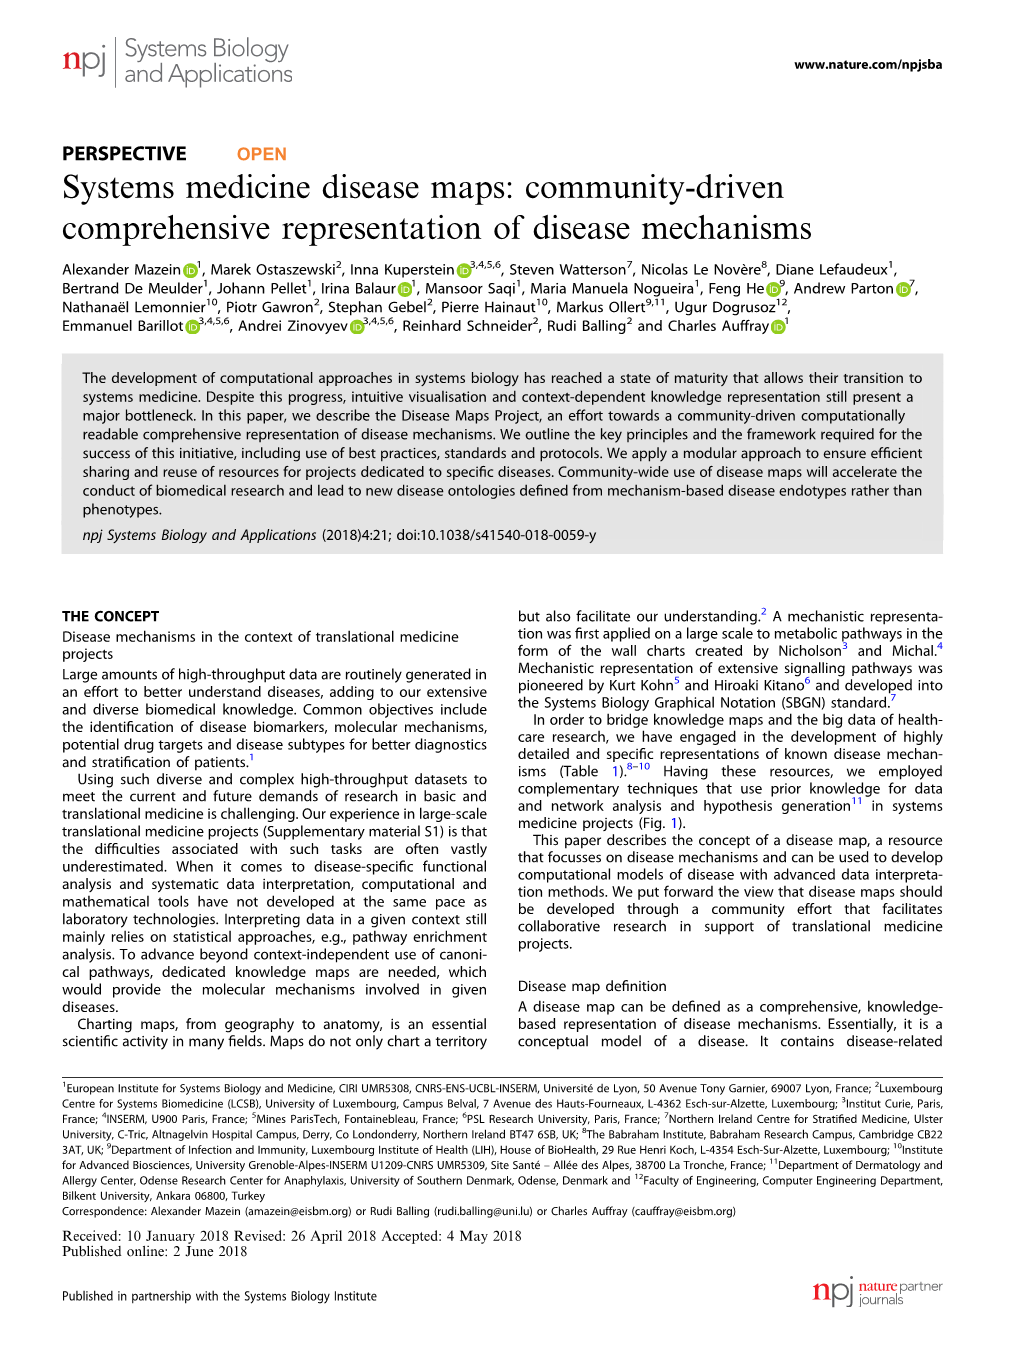 Systems Medicine Disease Maps: Community-Driven Comprehensive Representation of Disease Mechanisms